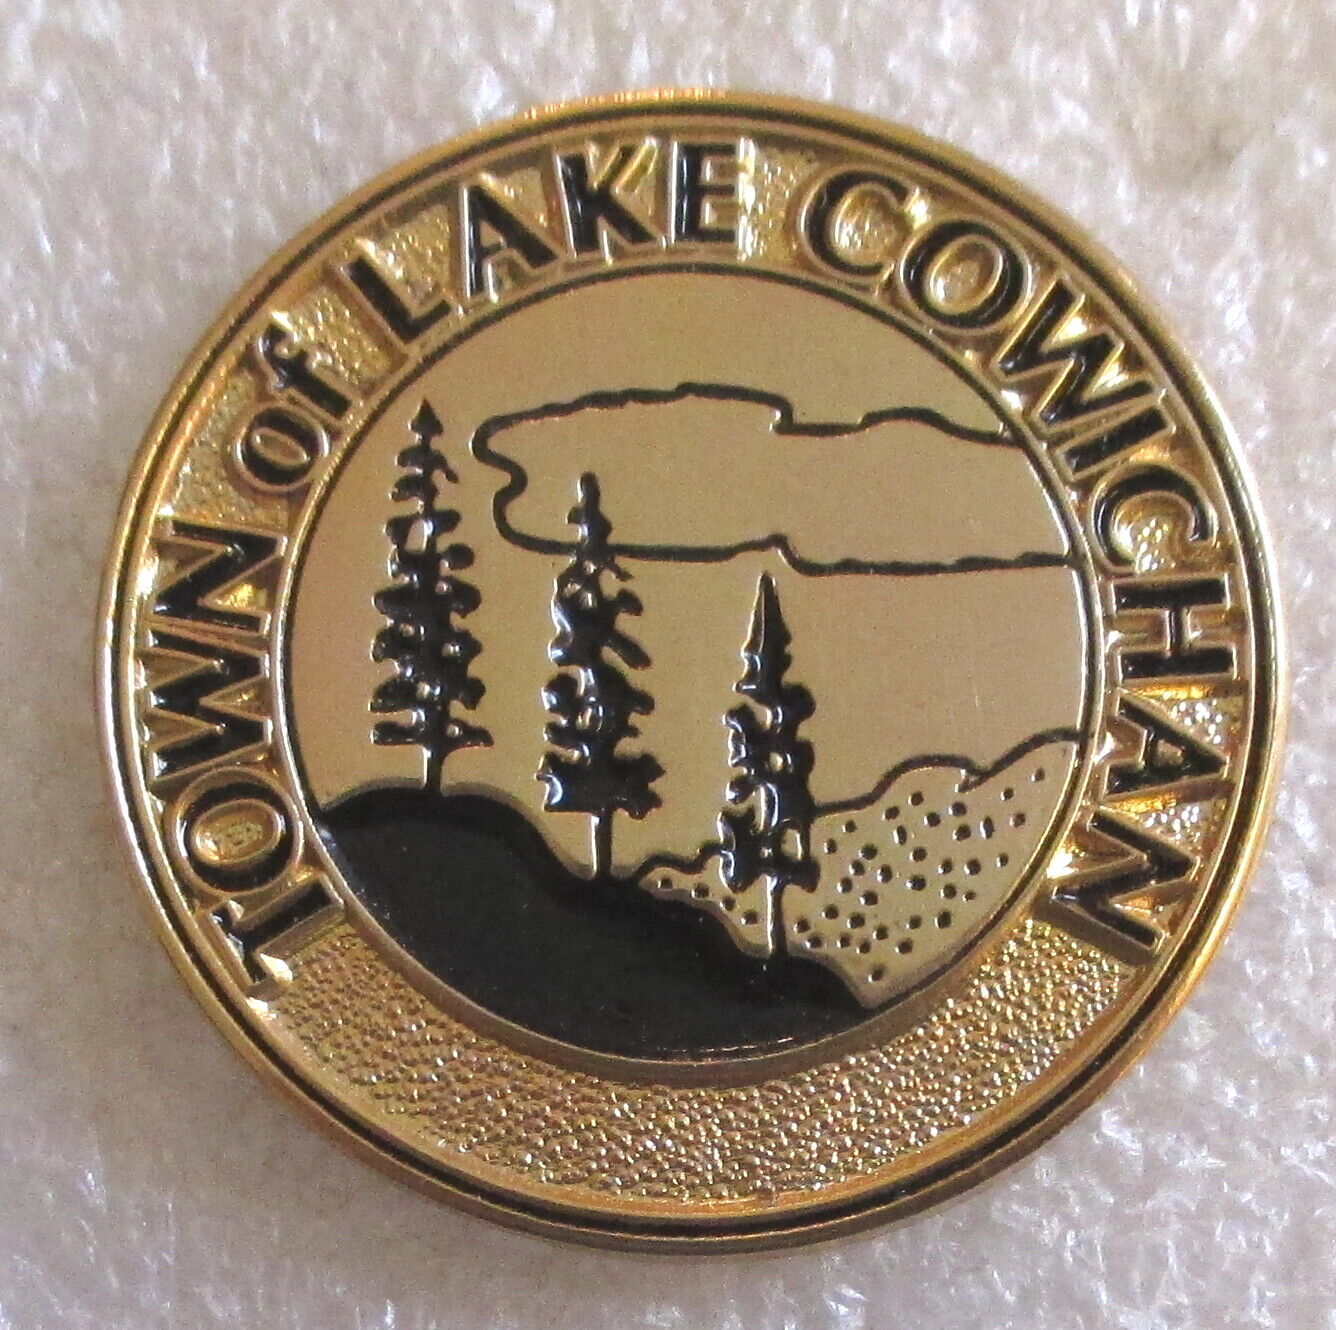 Town of Lake Cowichan - Vancouver Island BC Canada Tourist Travel Souvenir Pin